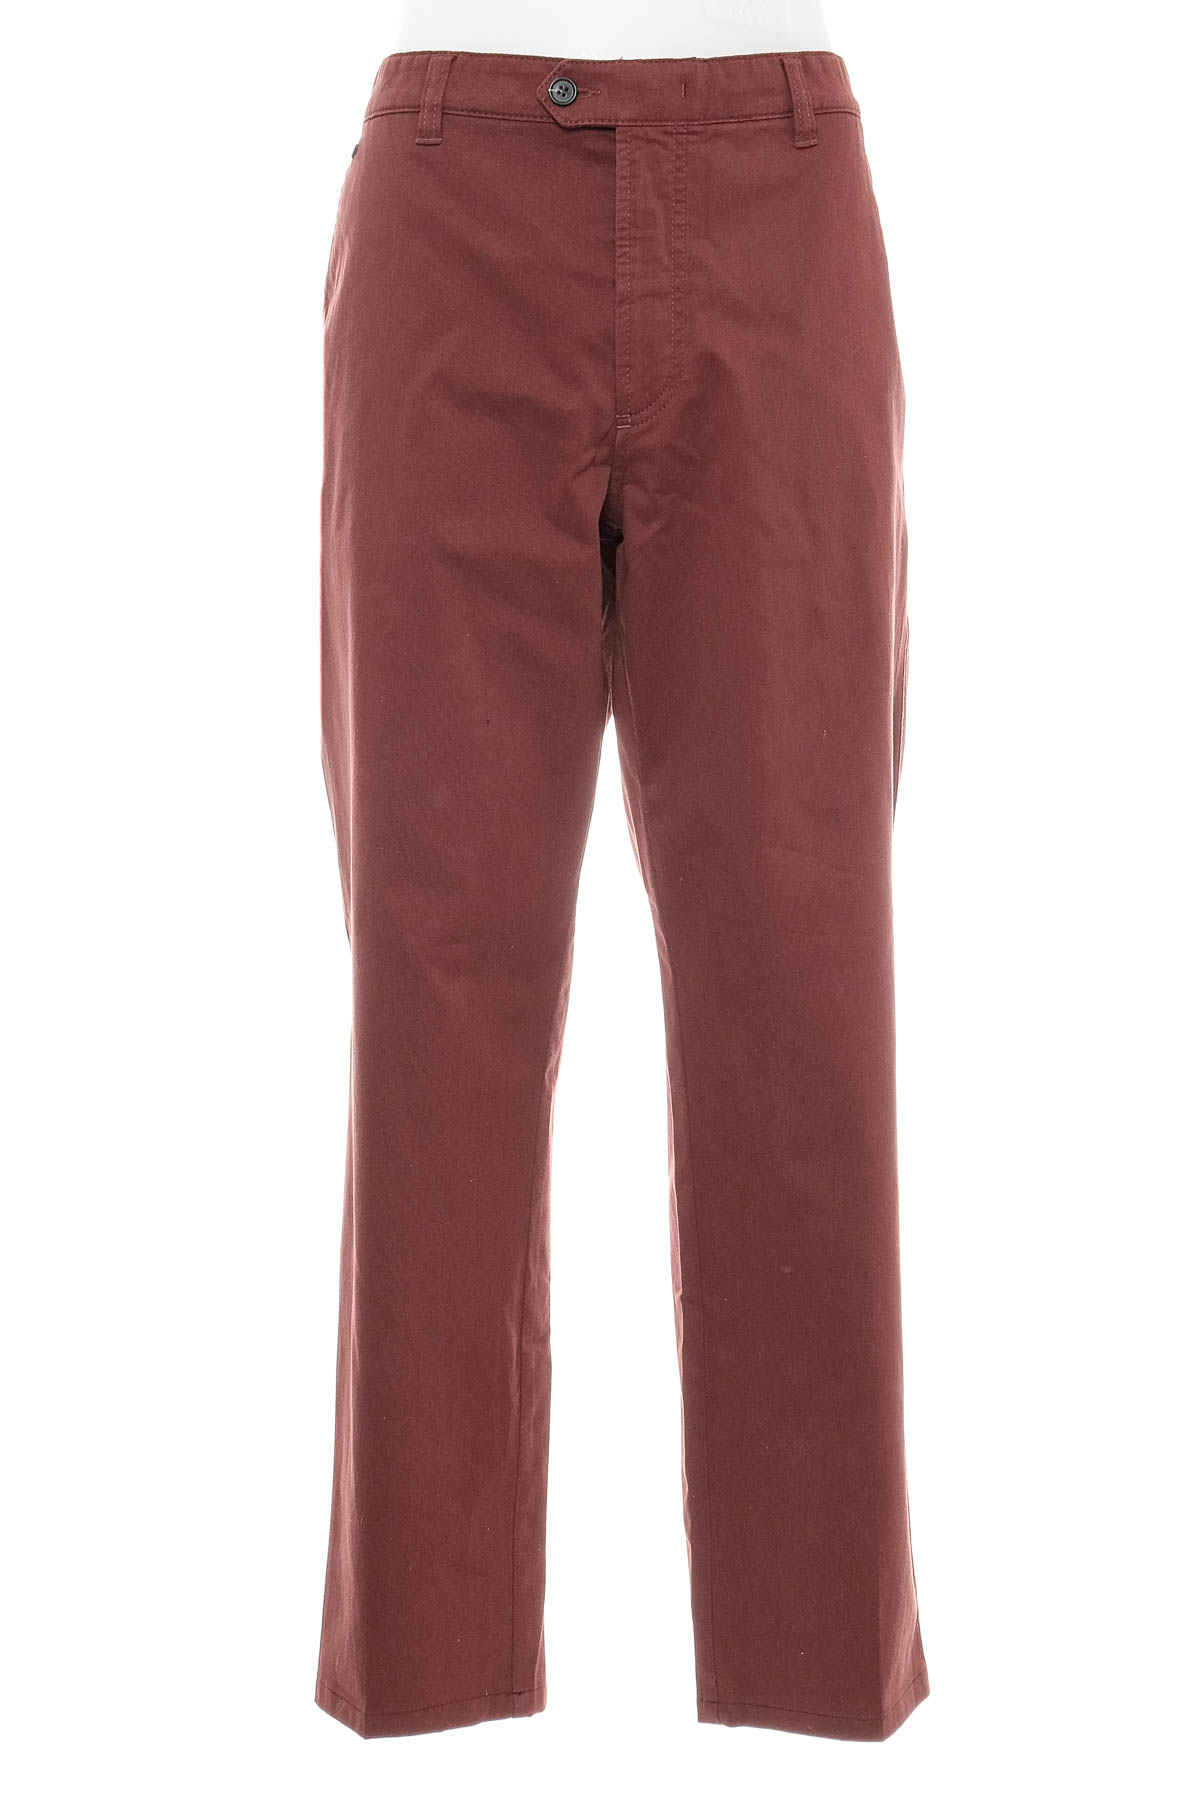 Men's trousers - BRUHL - 0